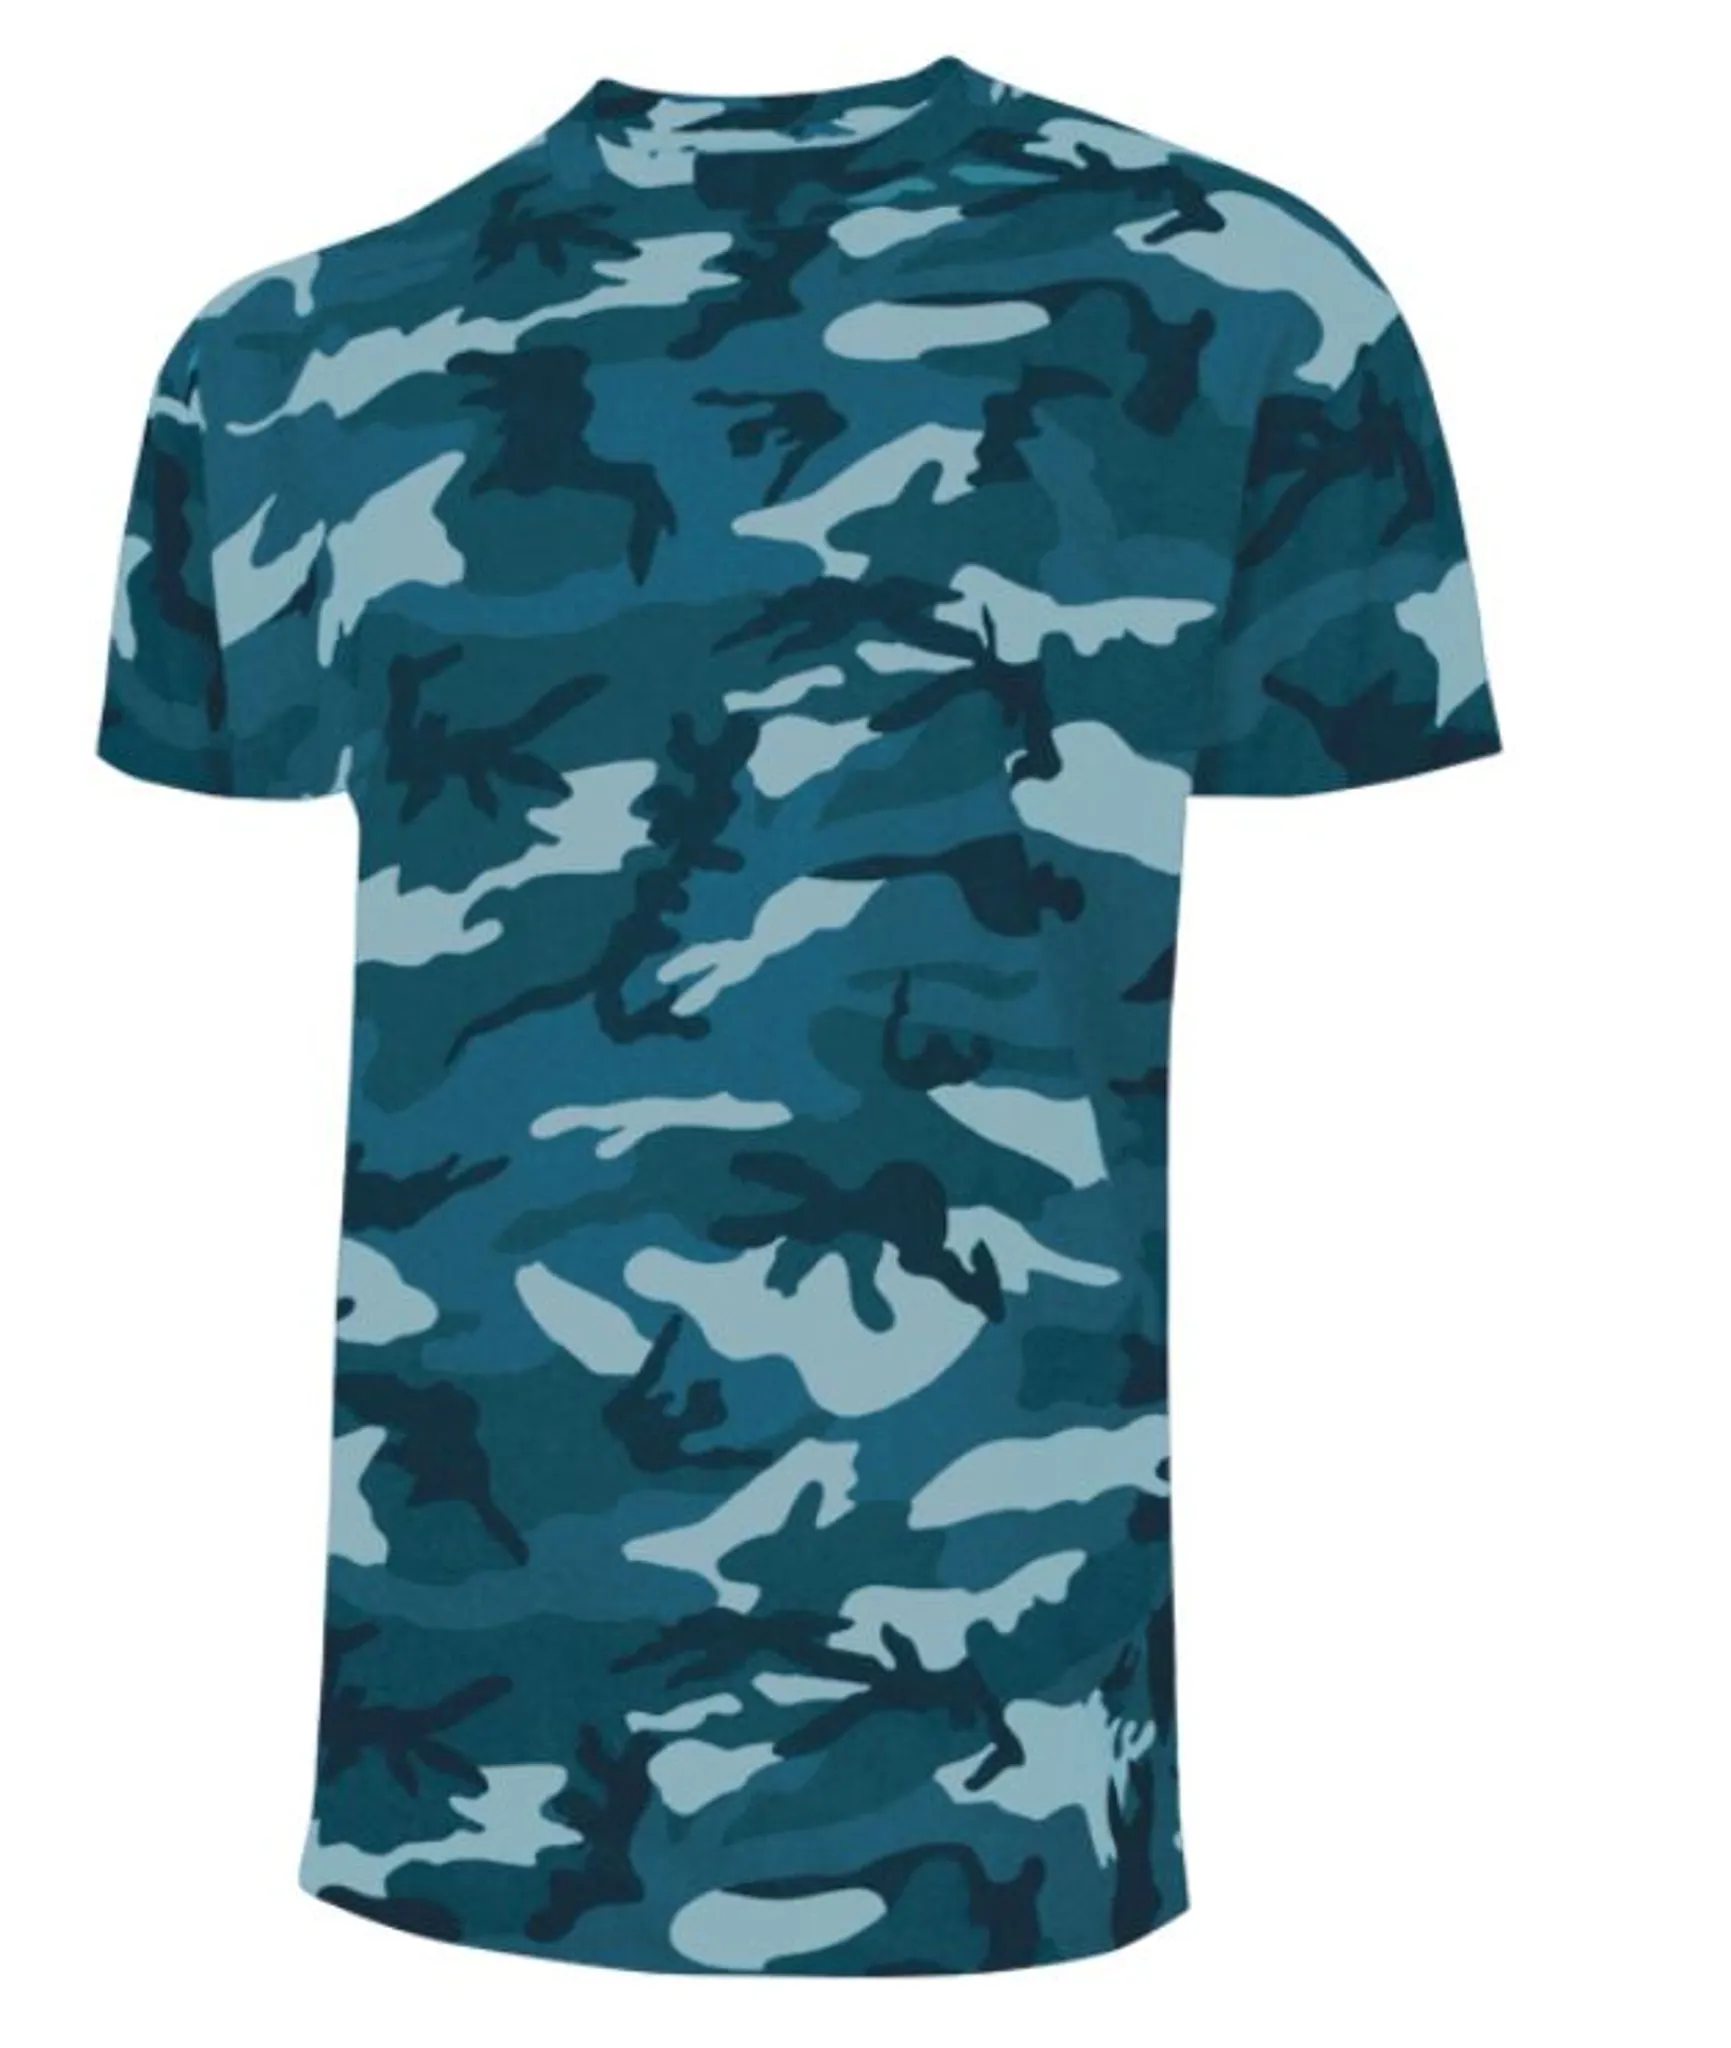 Arbeit T-Shirt Kurzarmshirt Unterhemd Arbeitsbekleidung 100% Baumwolle Blau  Camouflage (TS-Moro-Blue) Gr. XXL